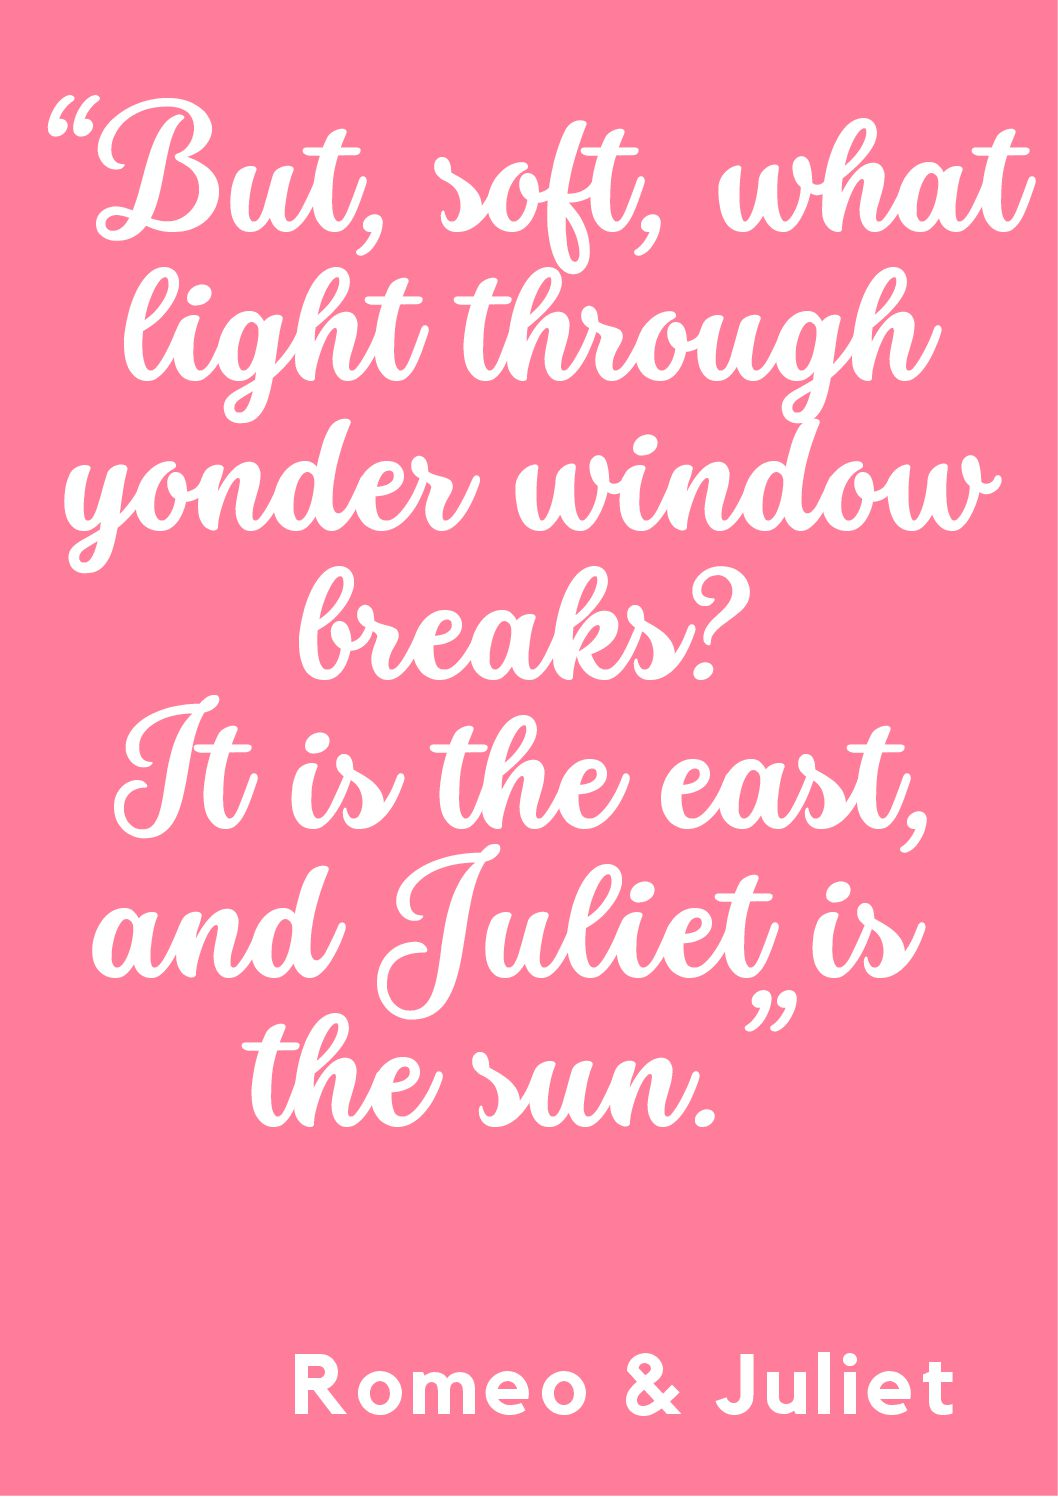 Romeo & Juliet quotes